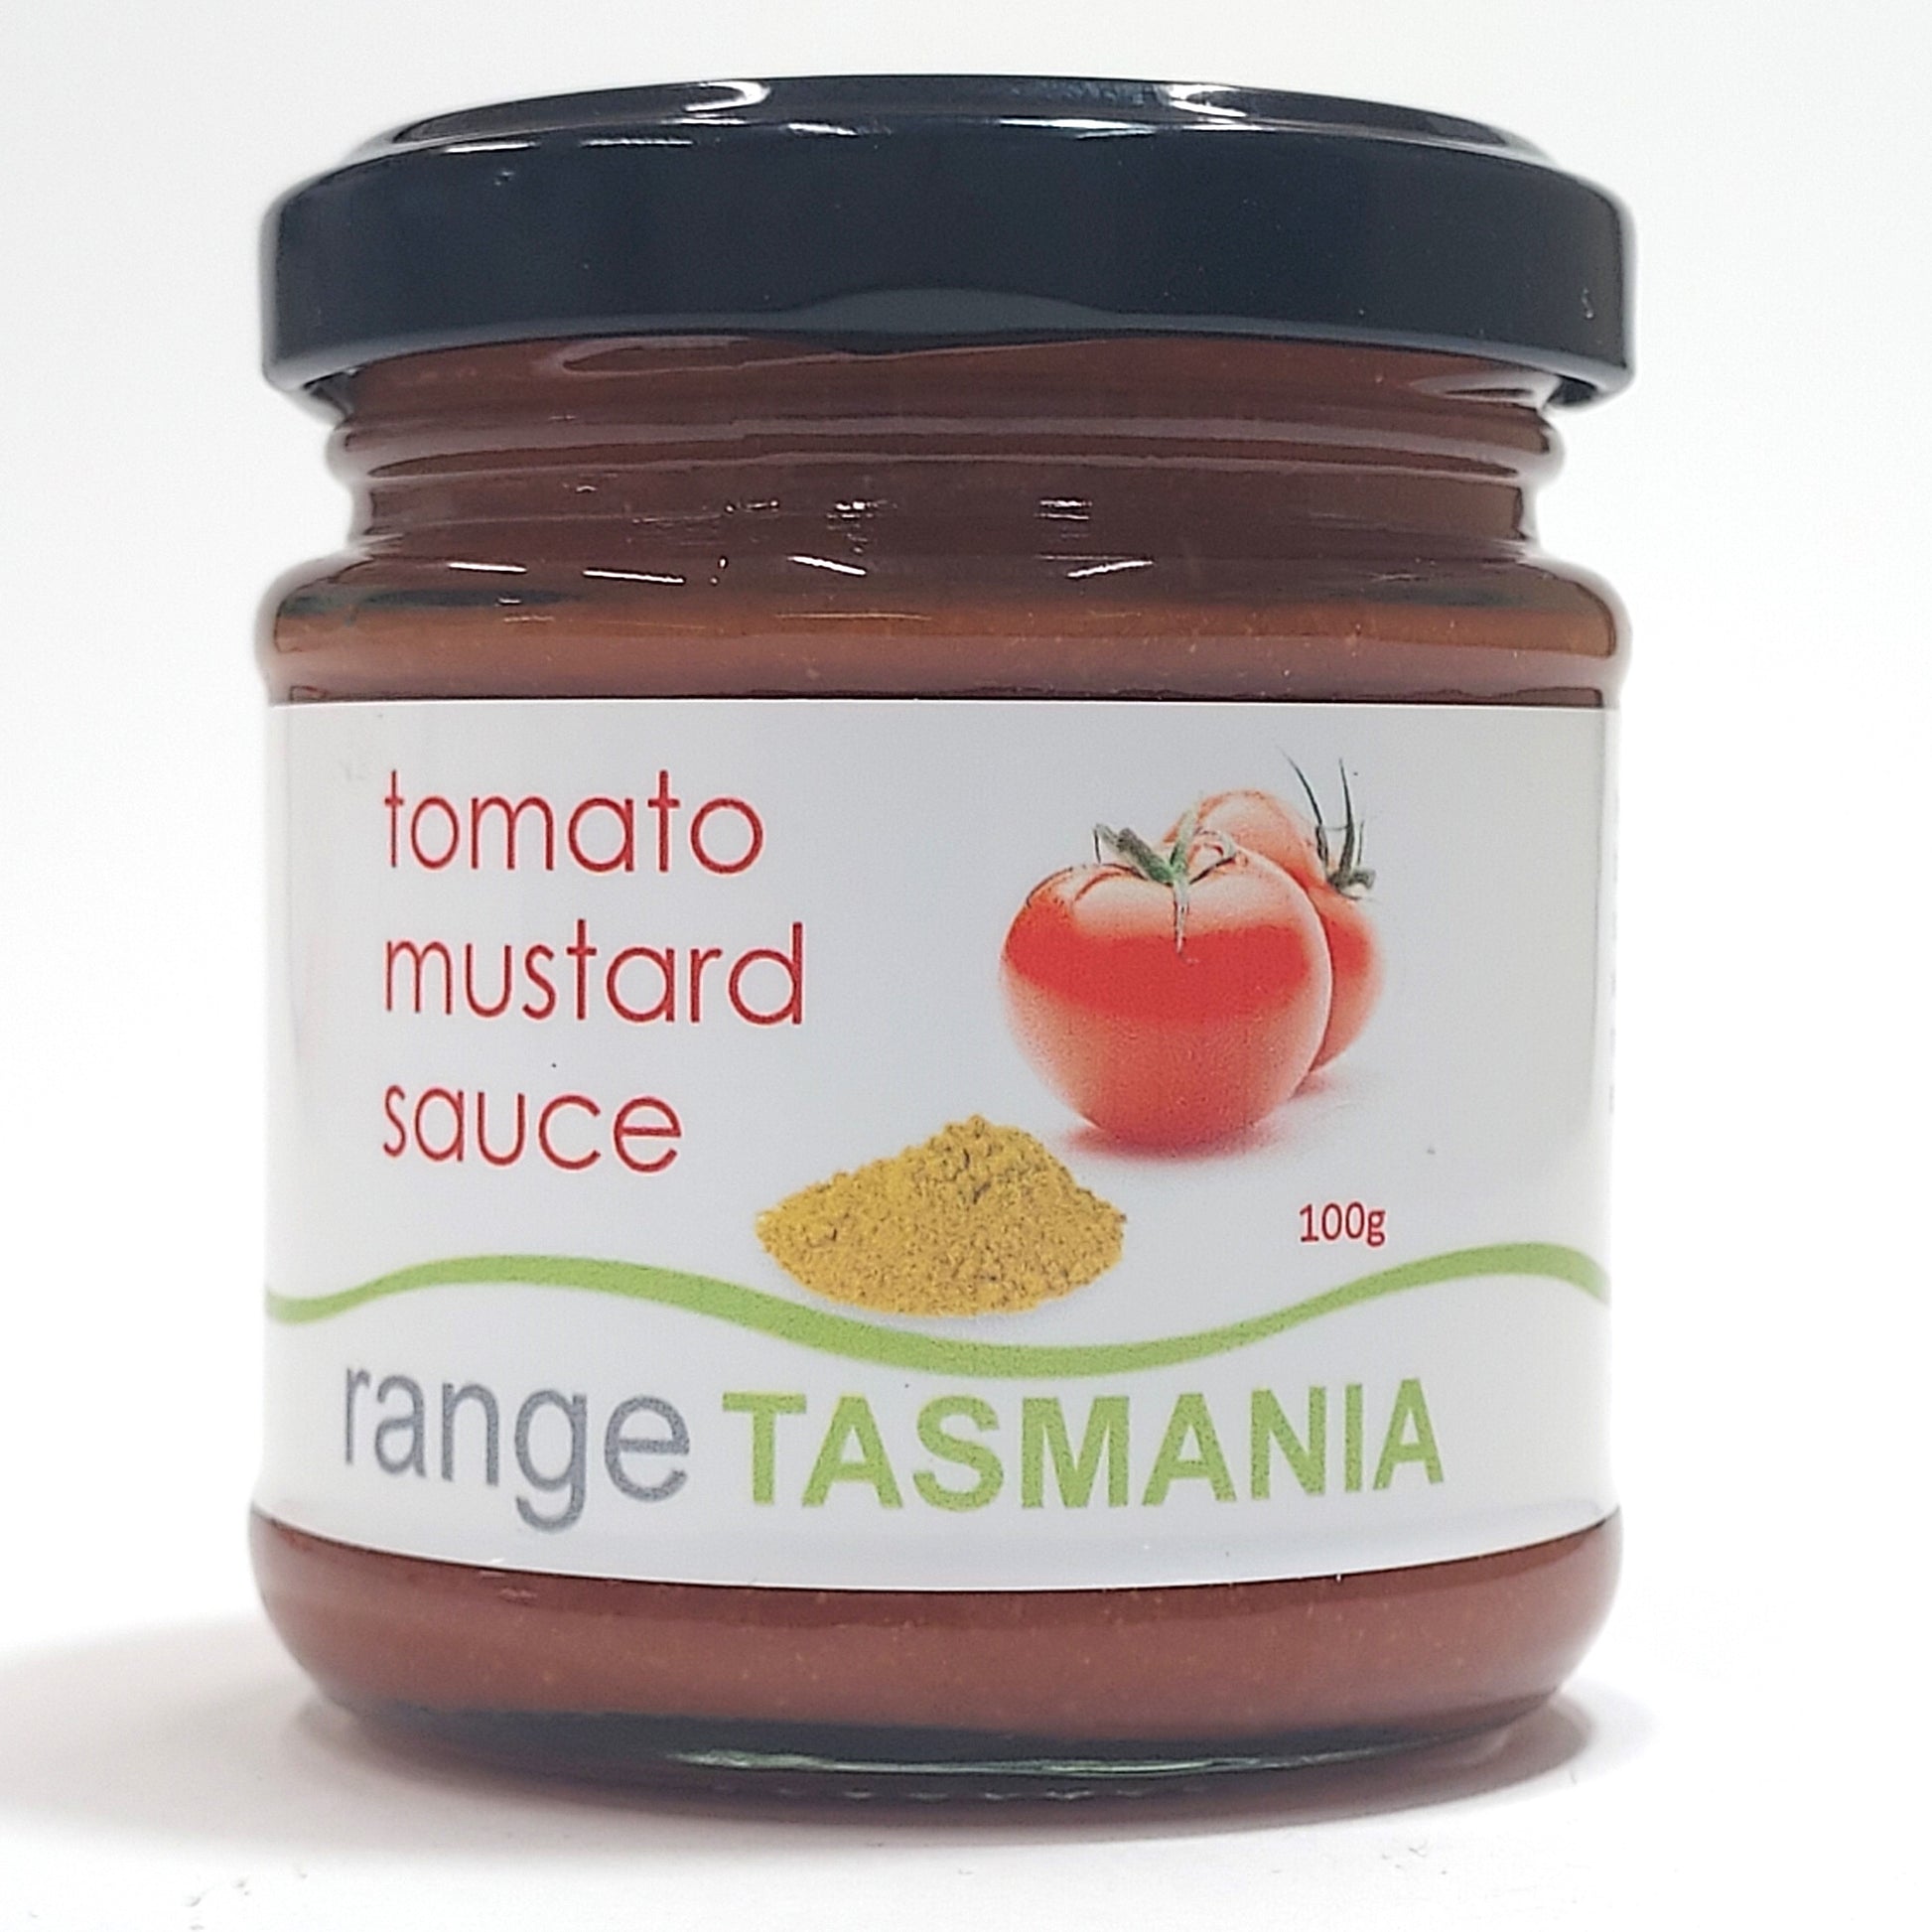 a 100 gram jar of range Tasmania tomato mustard sauce